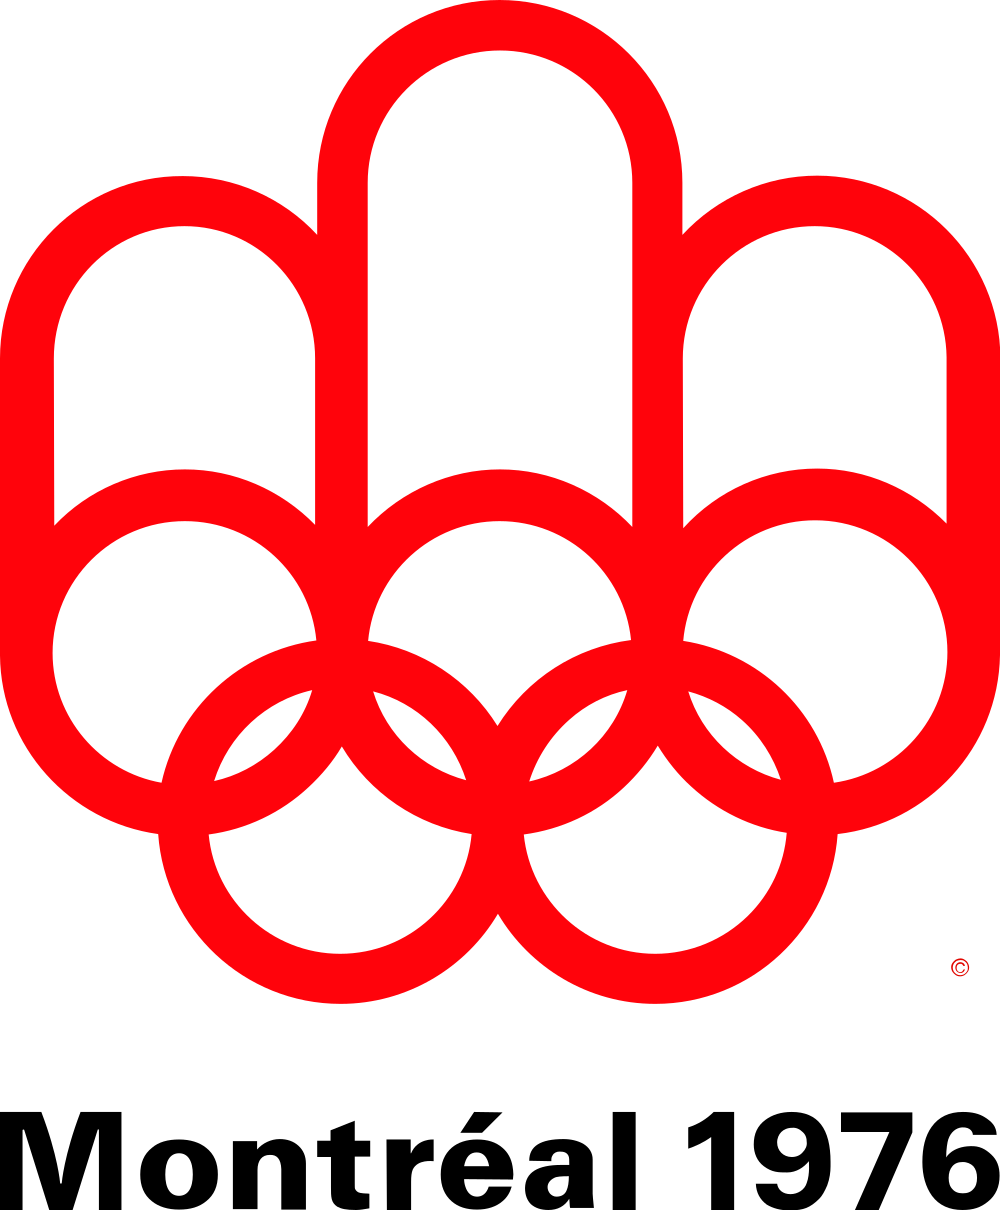 1976 Montréal Summer Olympics logo png transparent